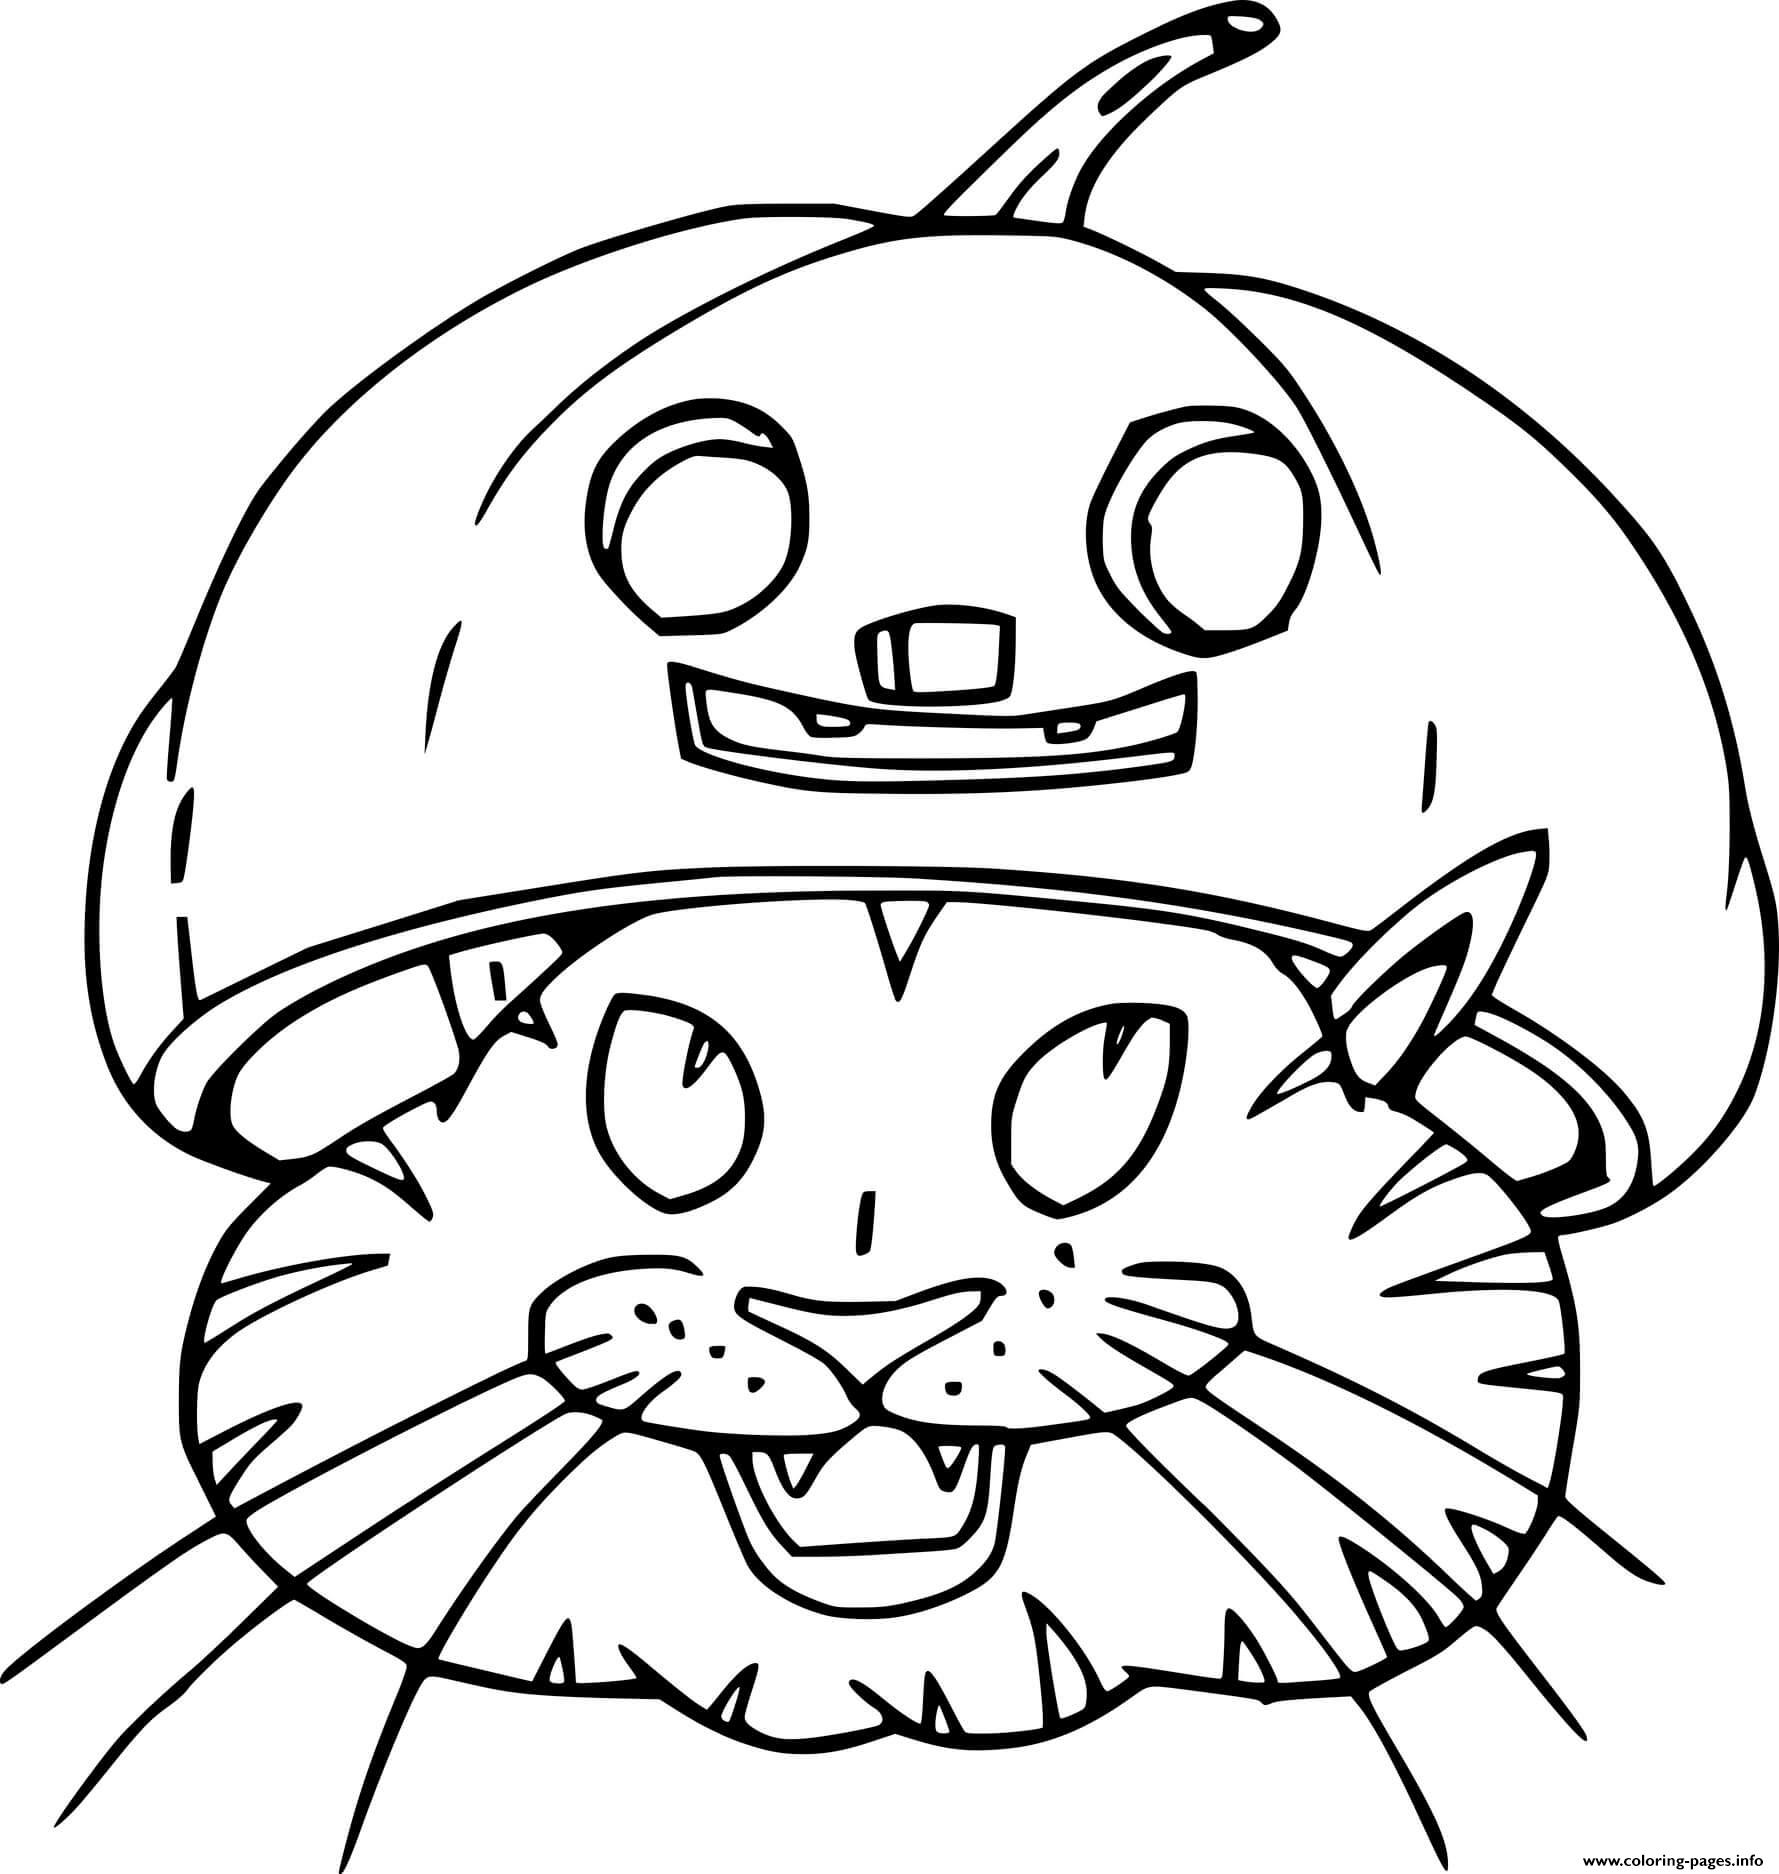 Cat In Jack O Lantern coloring